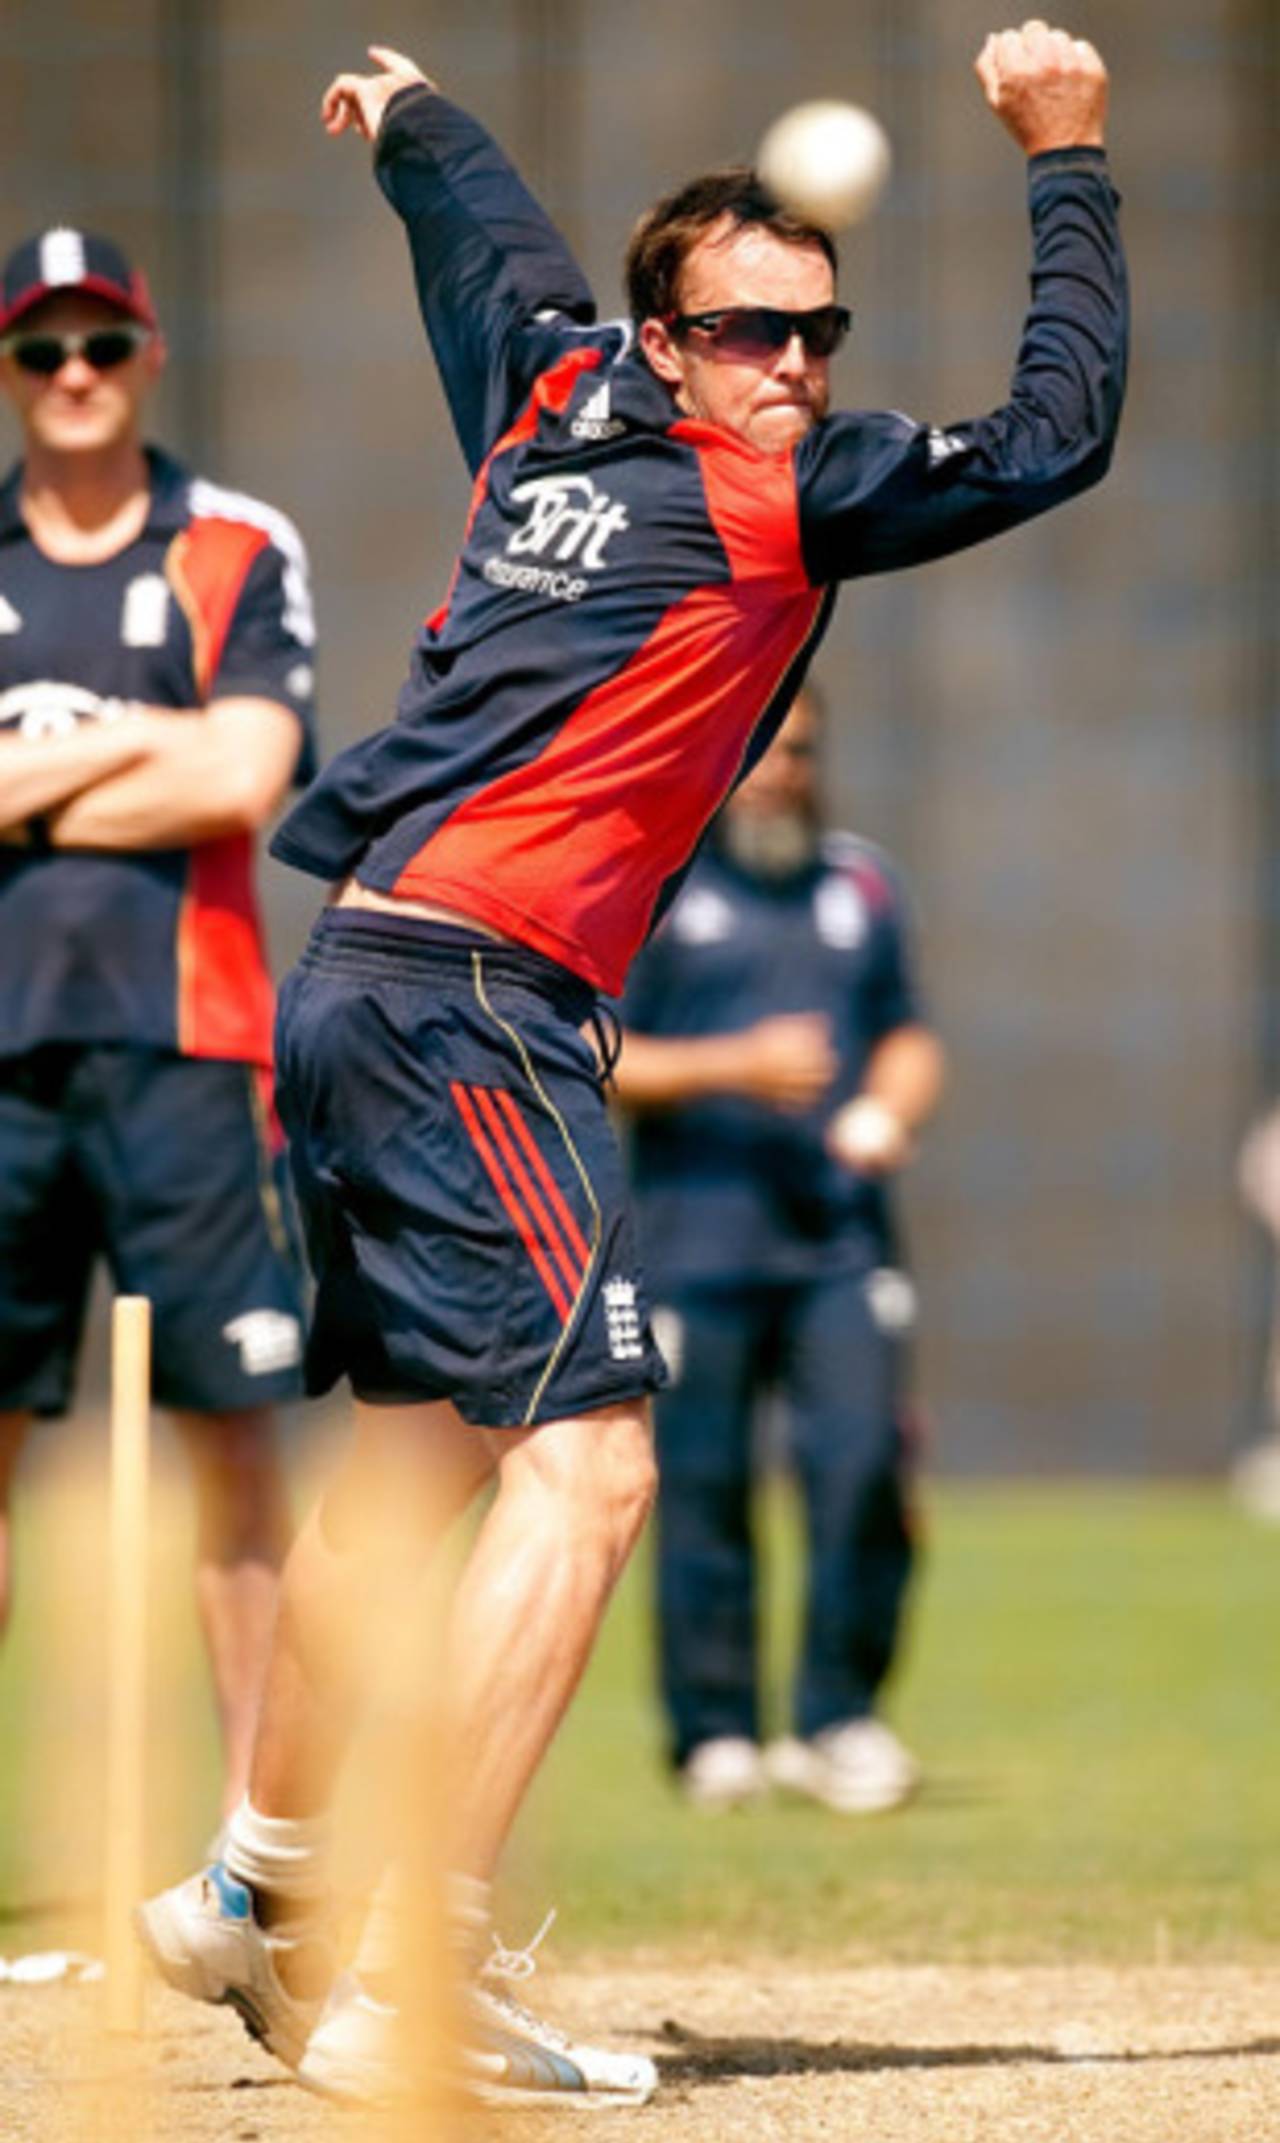 Graeme Swann loosens up during England's training session in Dubai, February 16, 2010